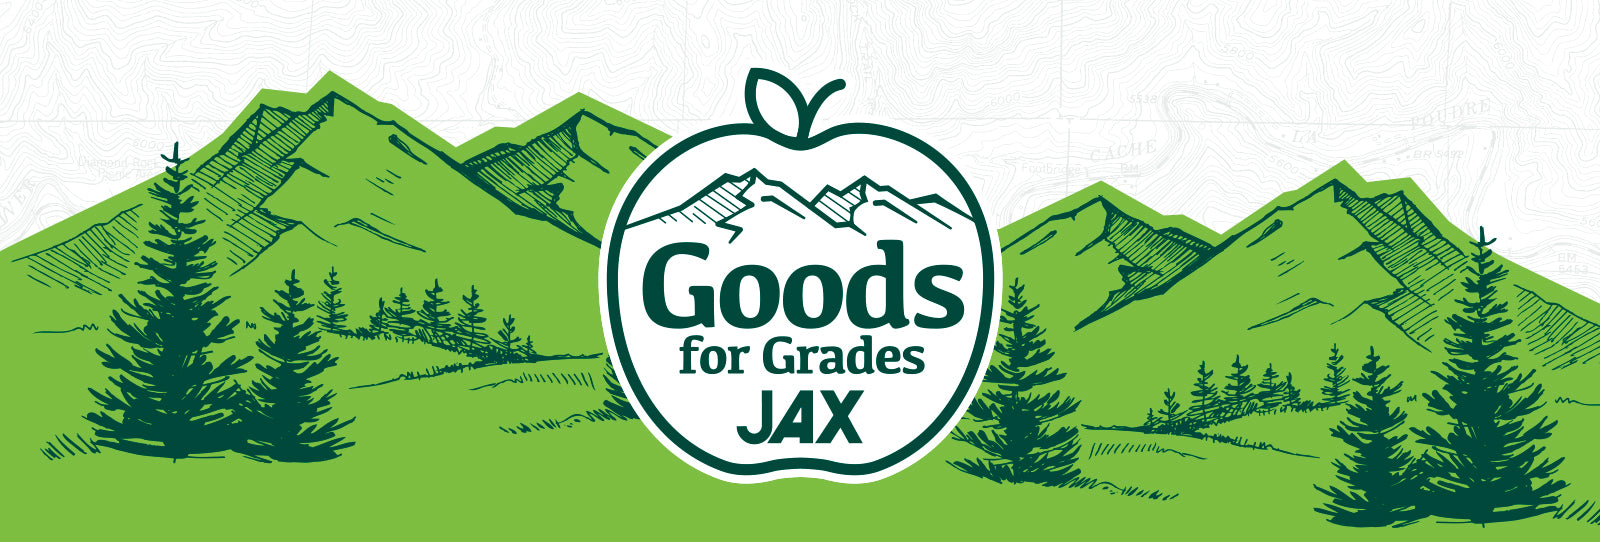 Goods for Grades Jax